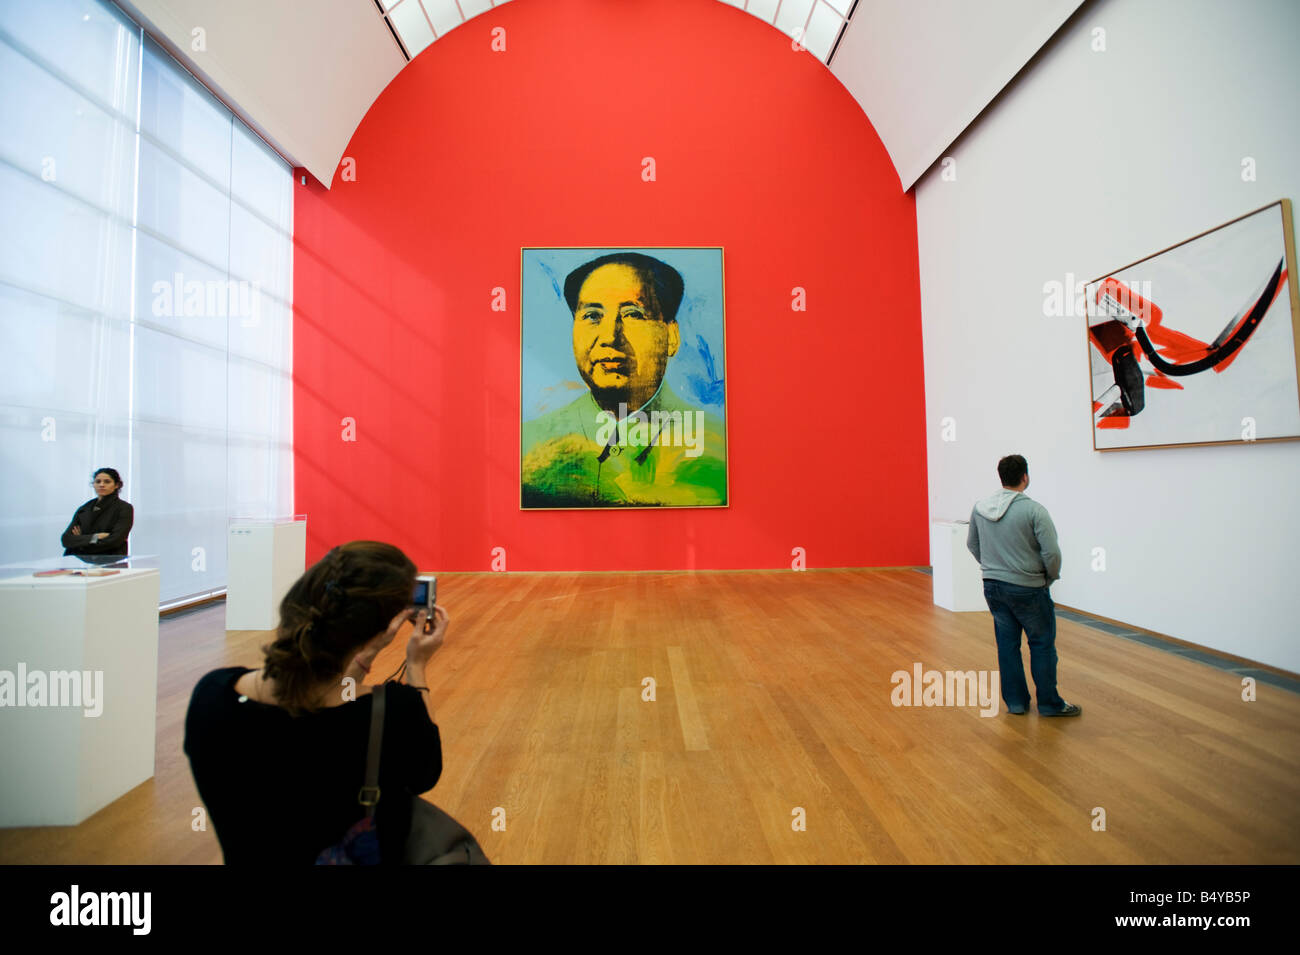 Andy Warhol painting of Chairman Mao on display at Hamburger Bahnhof art gallery in Berlin 2008 Stock Photo